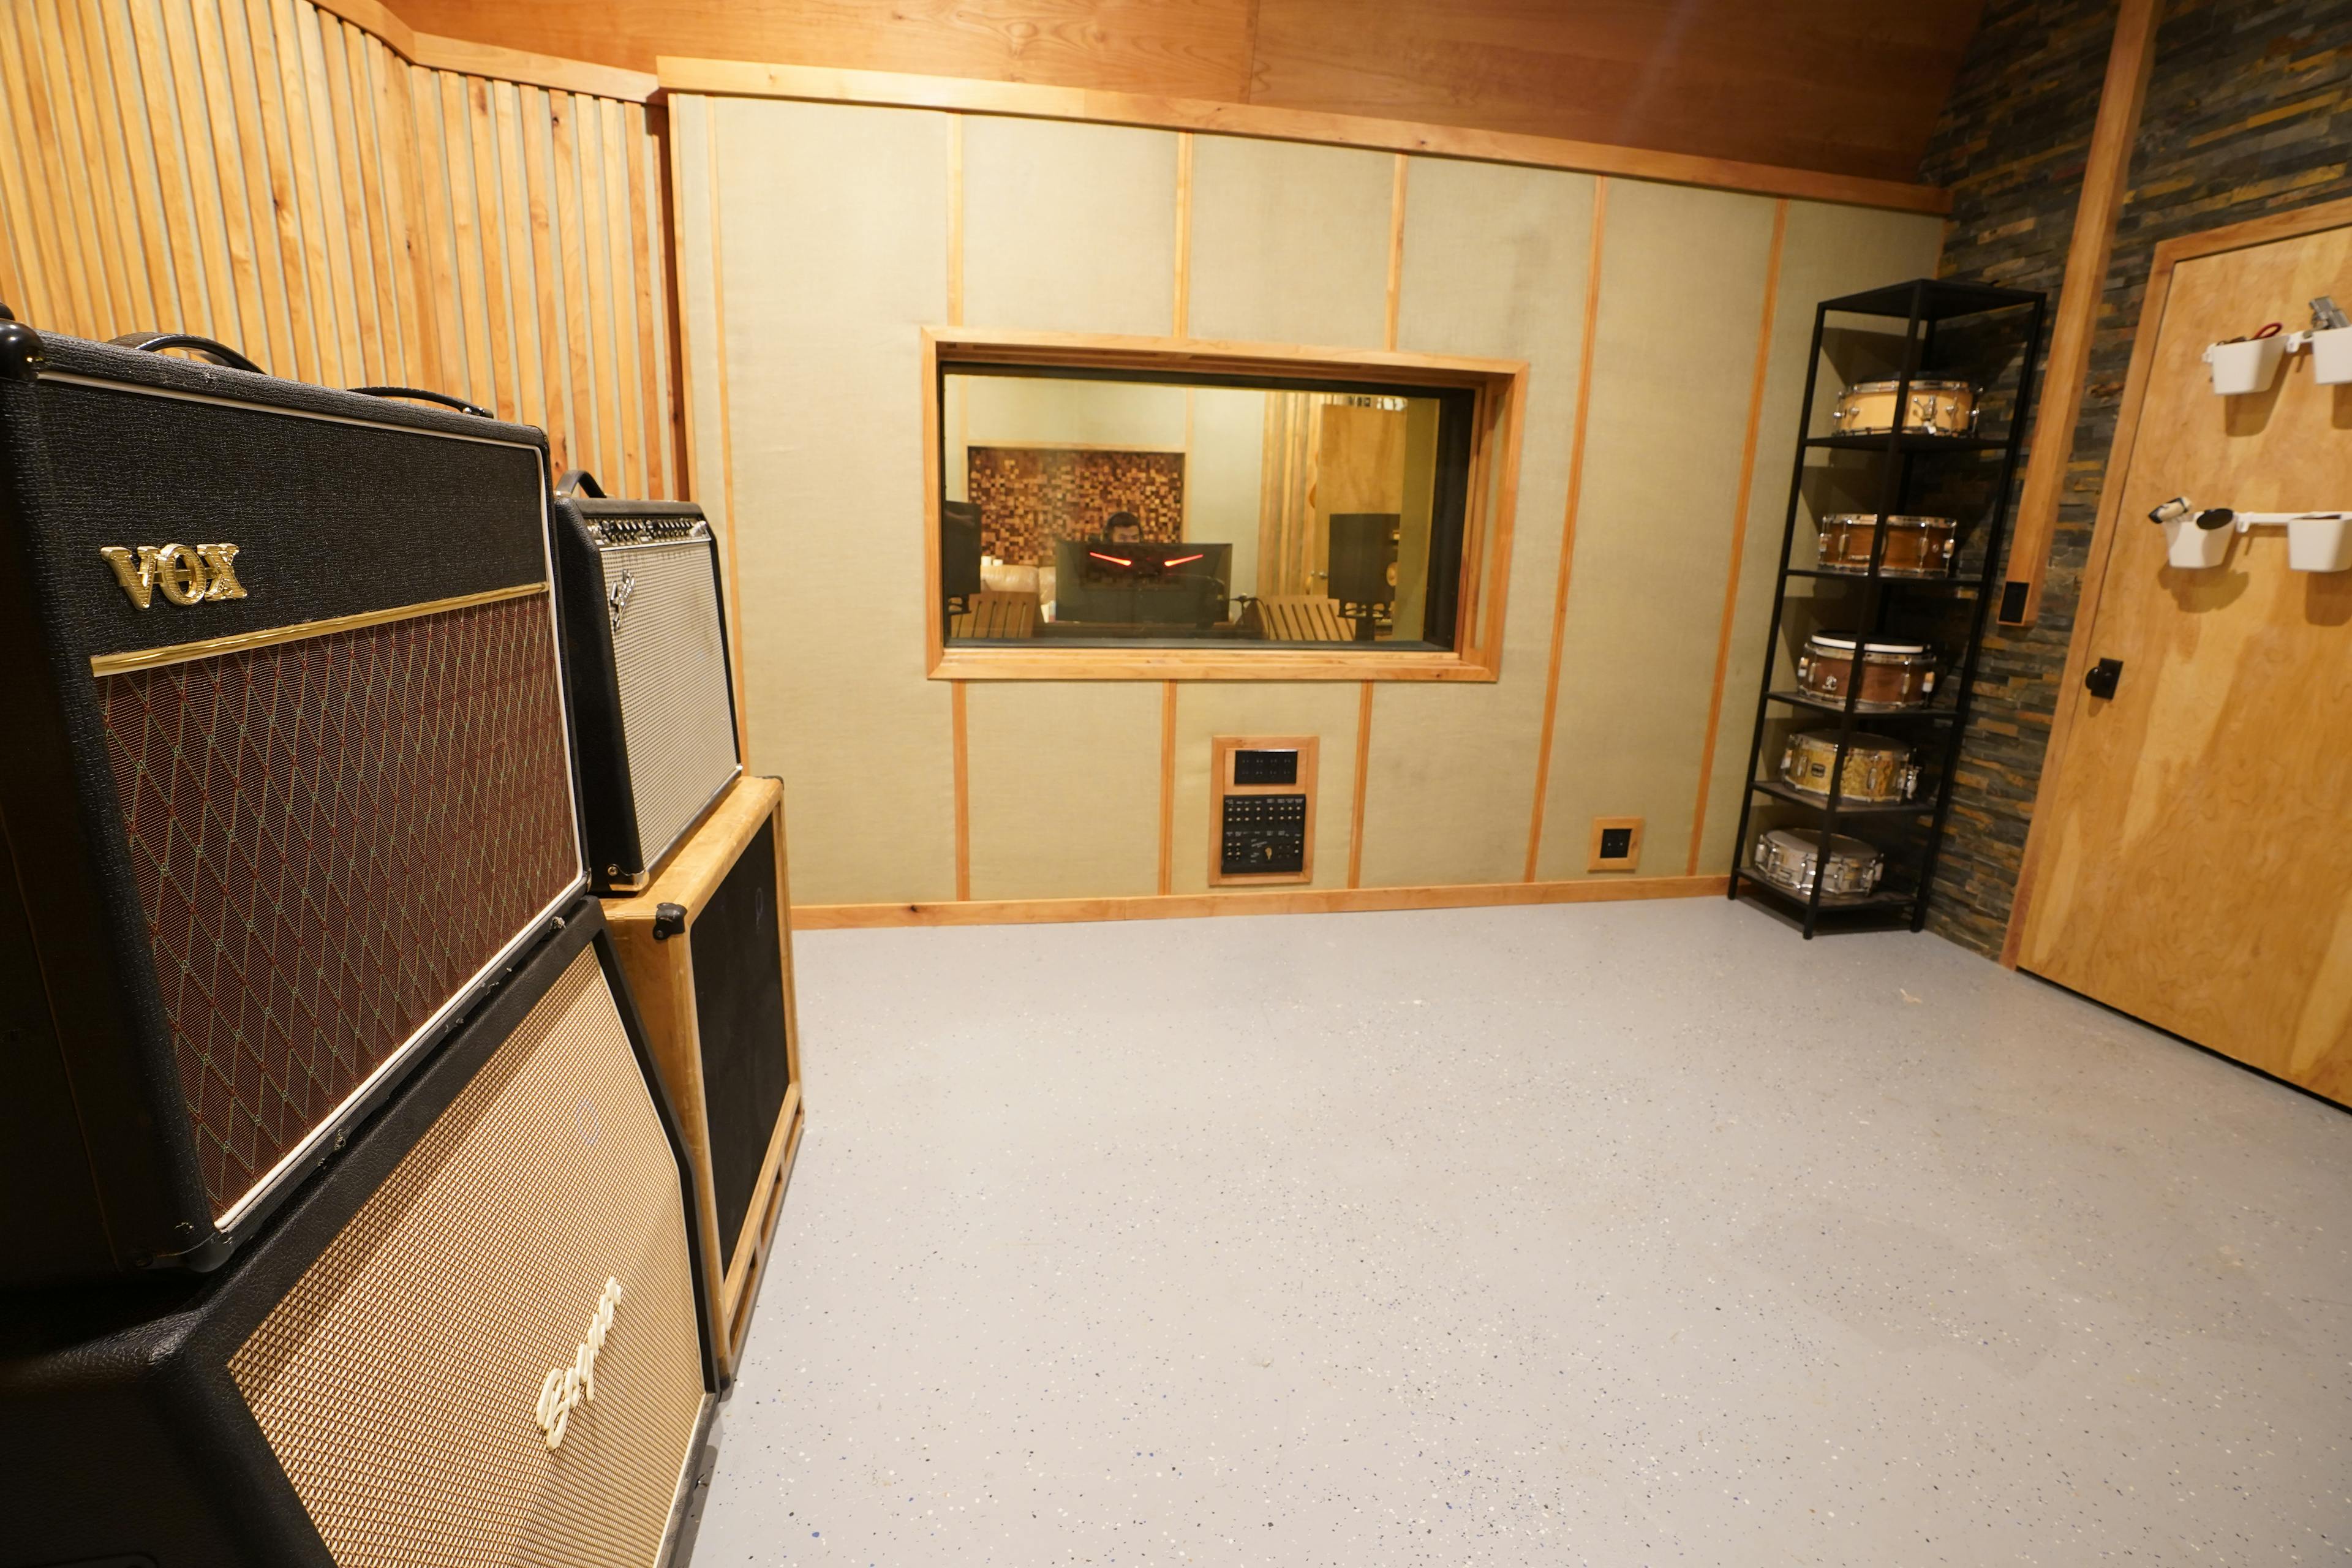 Picture of Dryw's studio amps